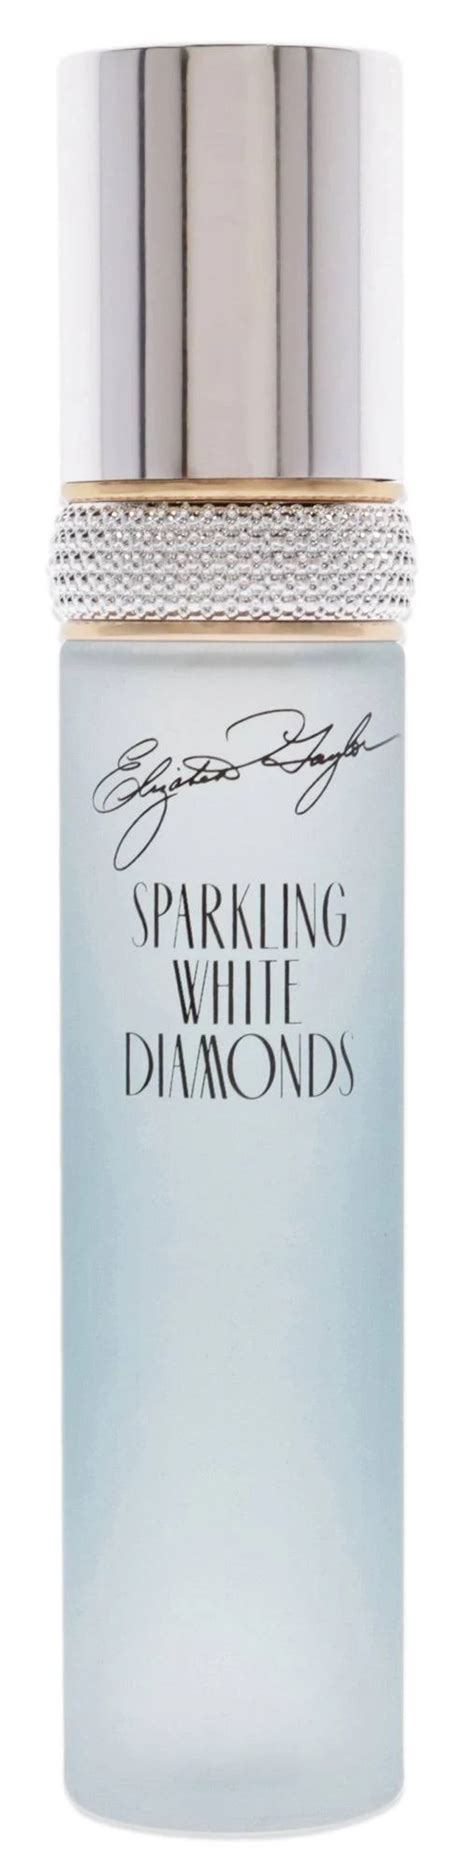 sparkling white diamonds elizabeth taylor perfume  fragrance